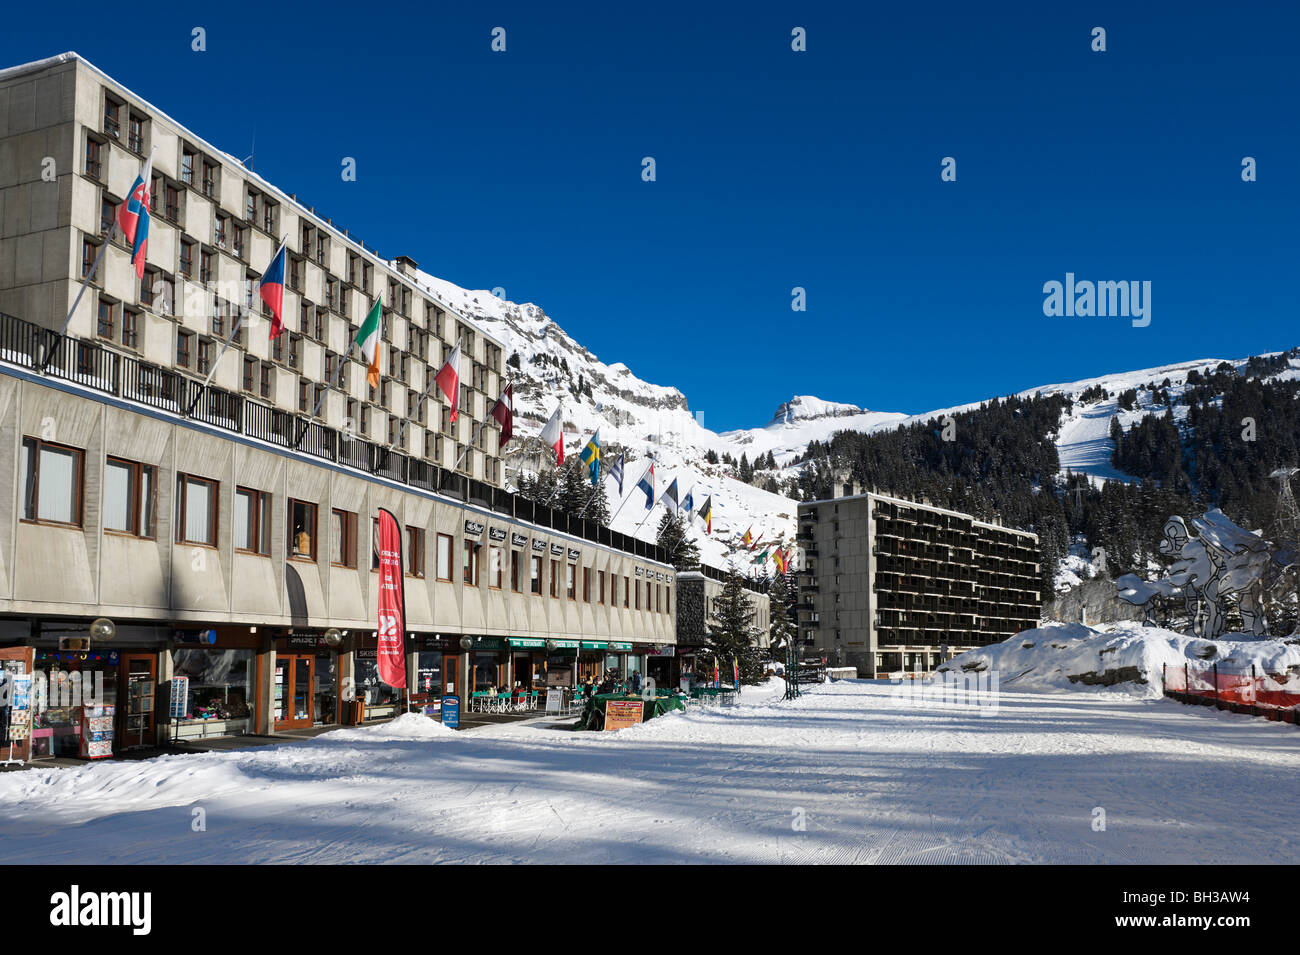 Apartments, shops and restaurants in Flaine Forum, Flaine, Grand Massif Ski Region, Haute Savoie, France Stock Photo